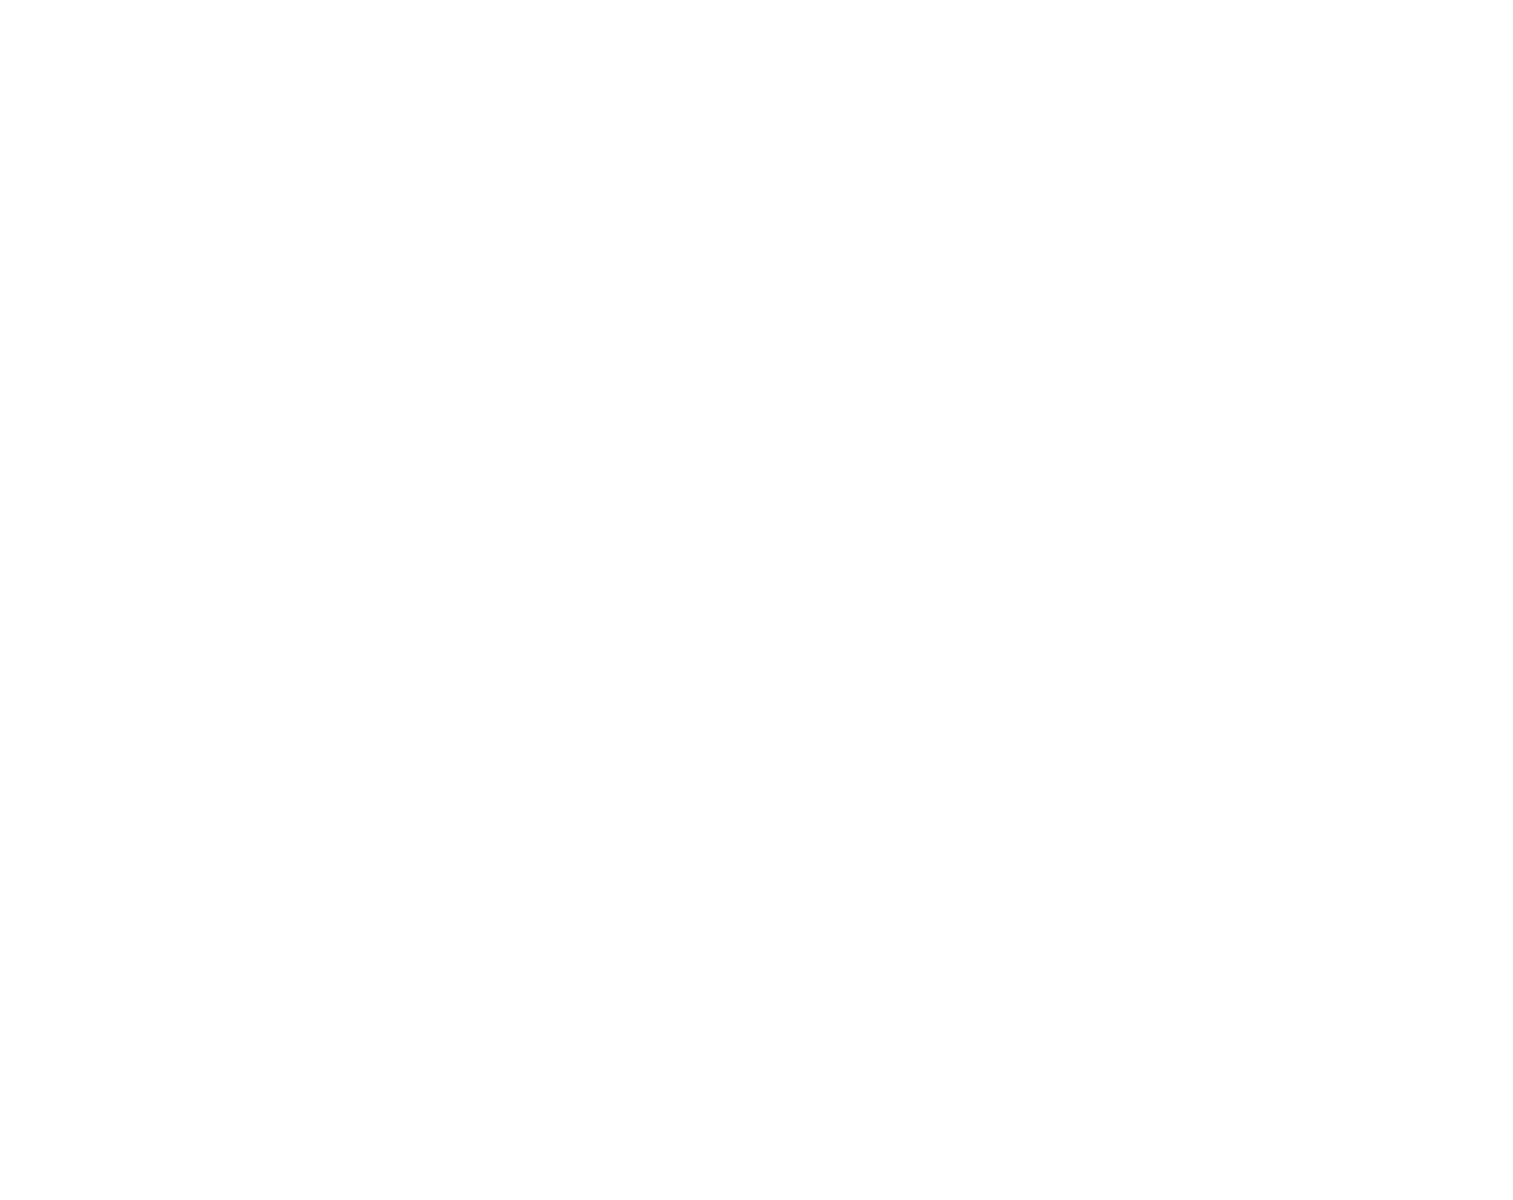 Hilltop Camper and RV